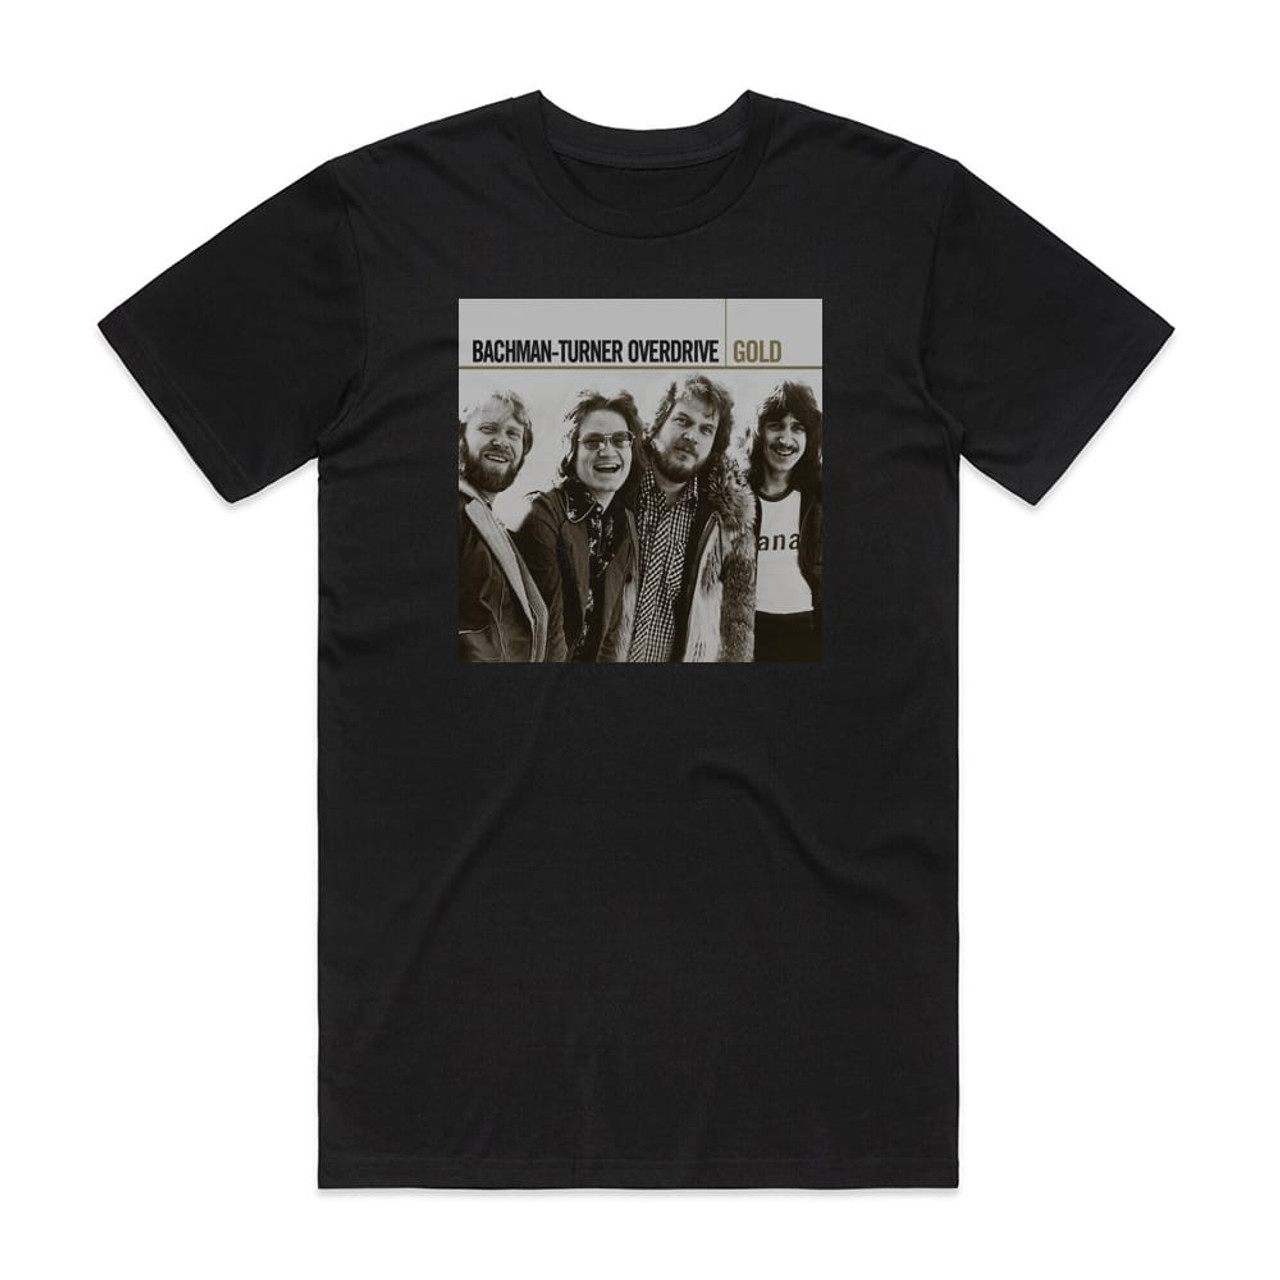 Bachman-Turner Overdrive Gold Album Cover T-Shirt Black